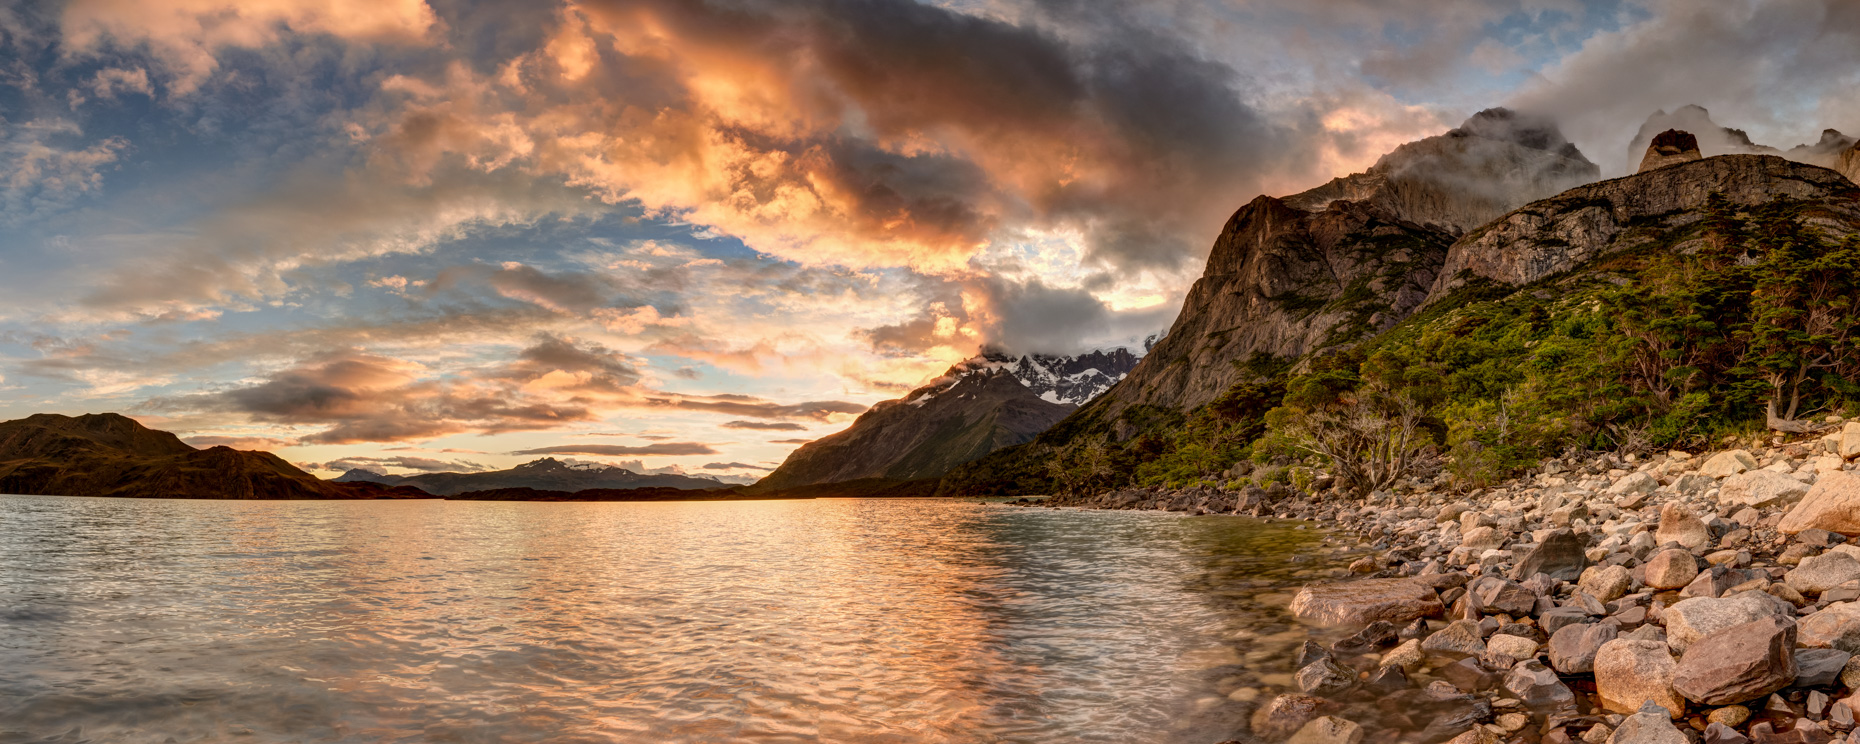 Lago Nordenskjold Sunset Panorama